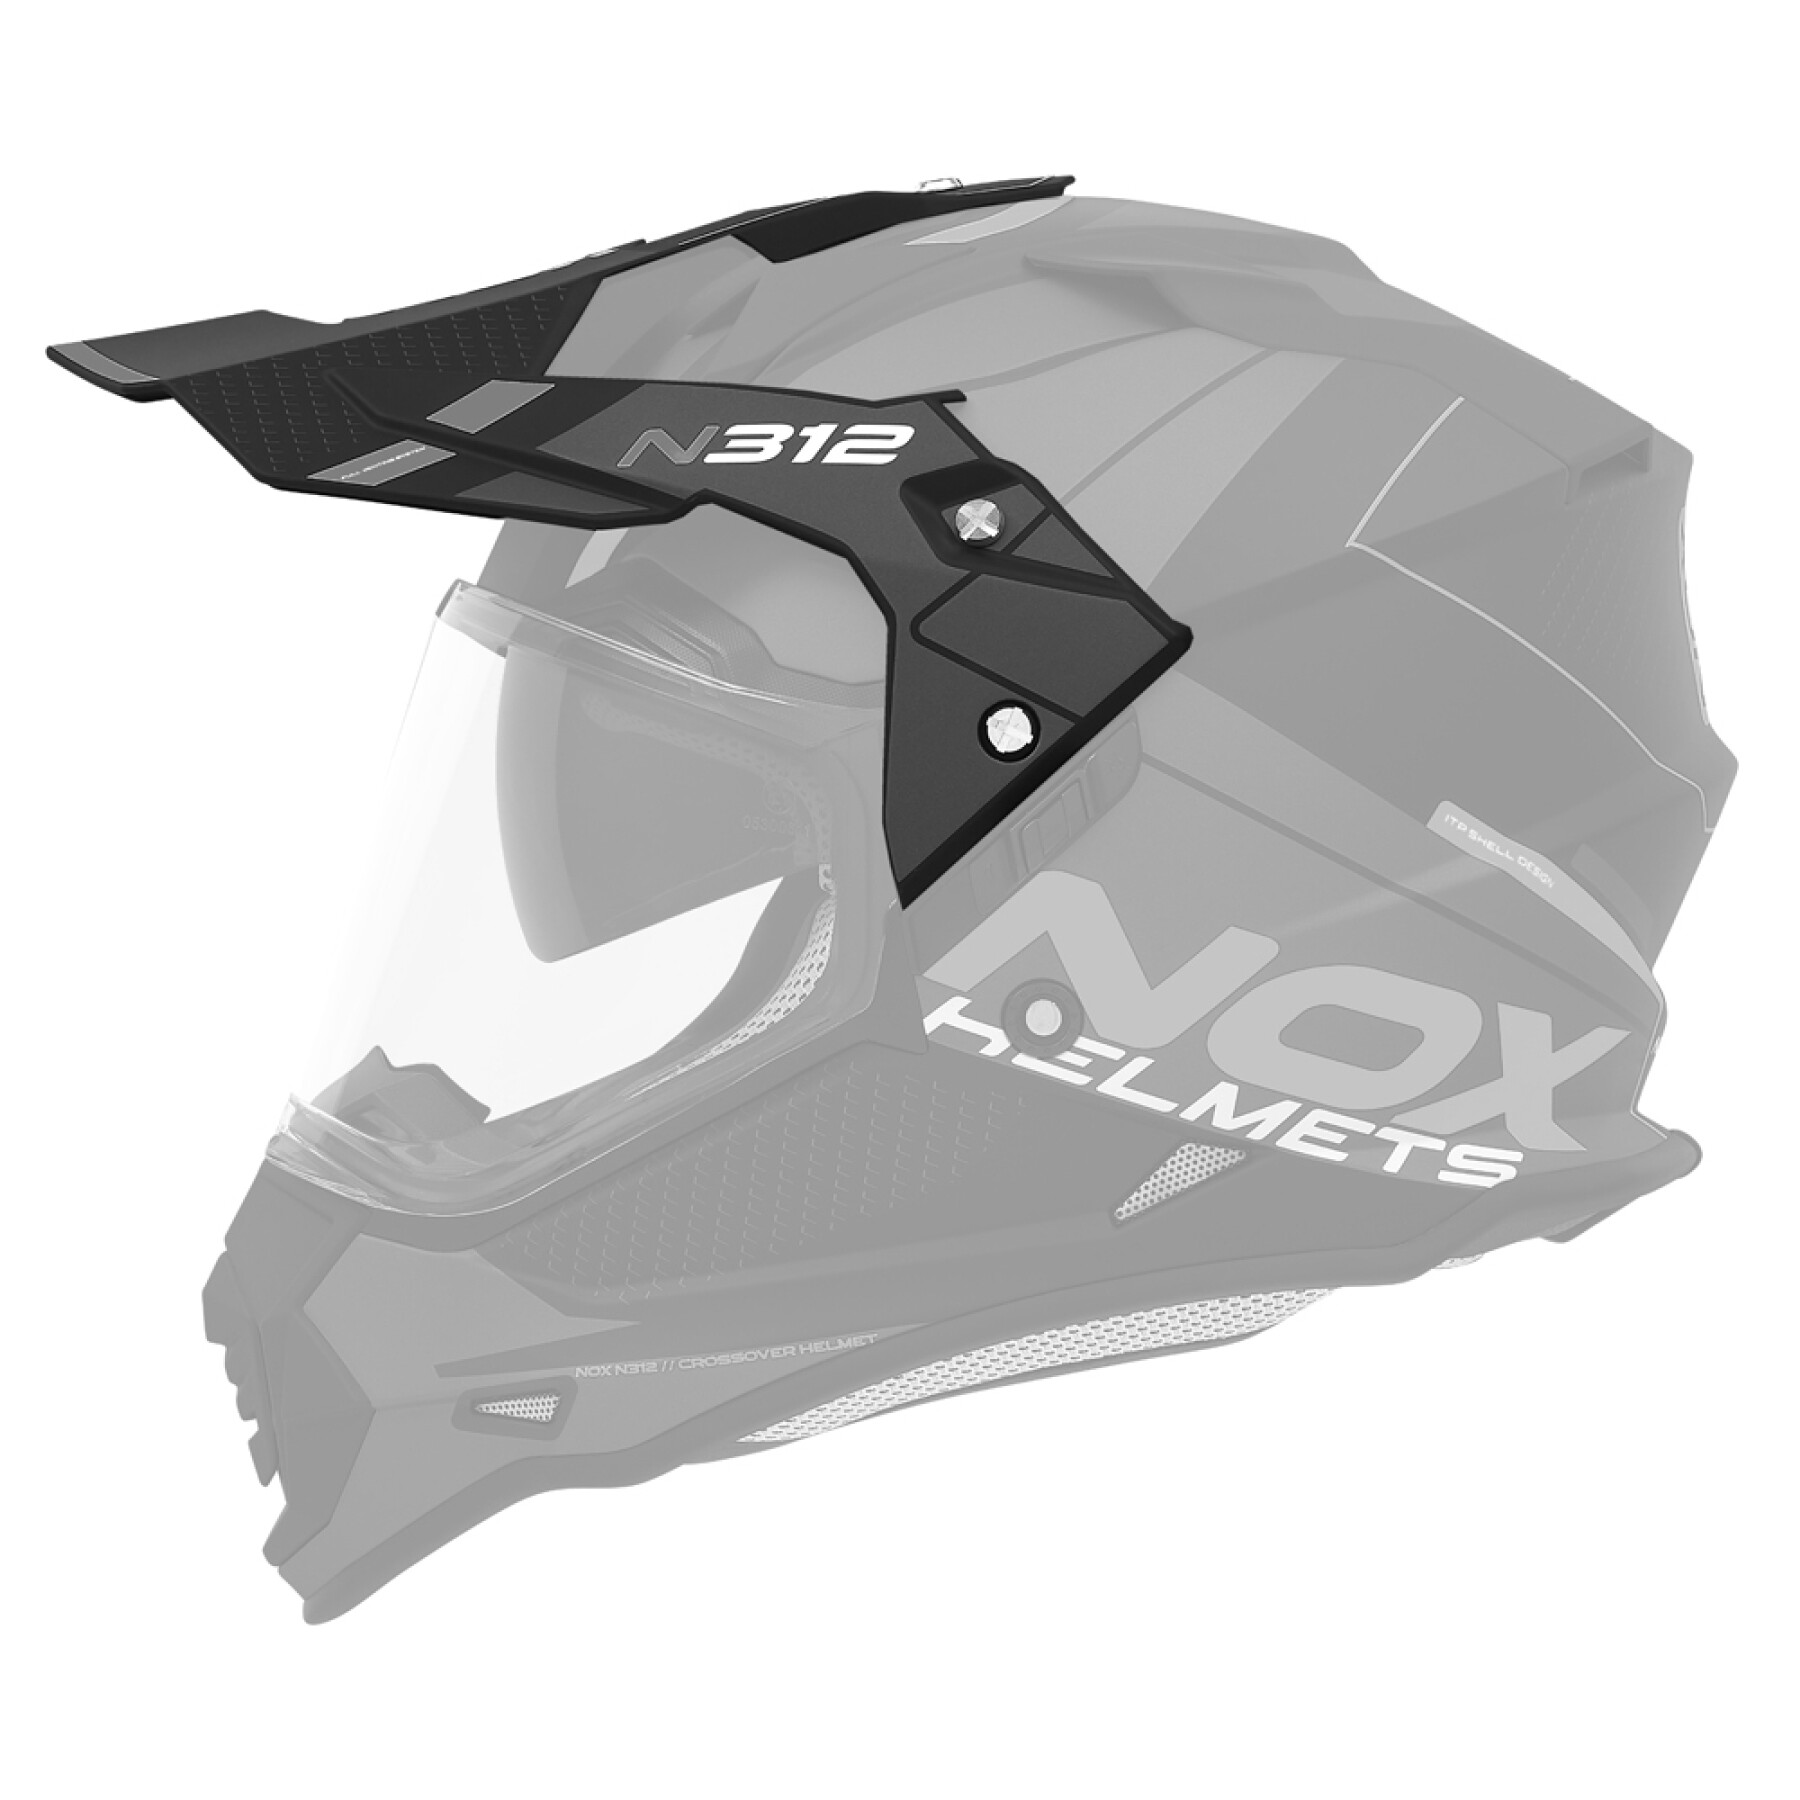 Visière casque de moto cross Nox 312 Drone